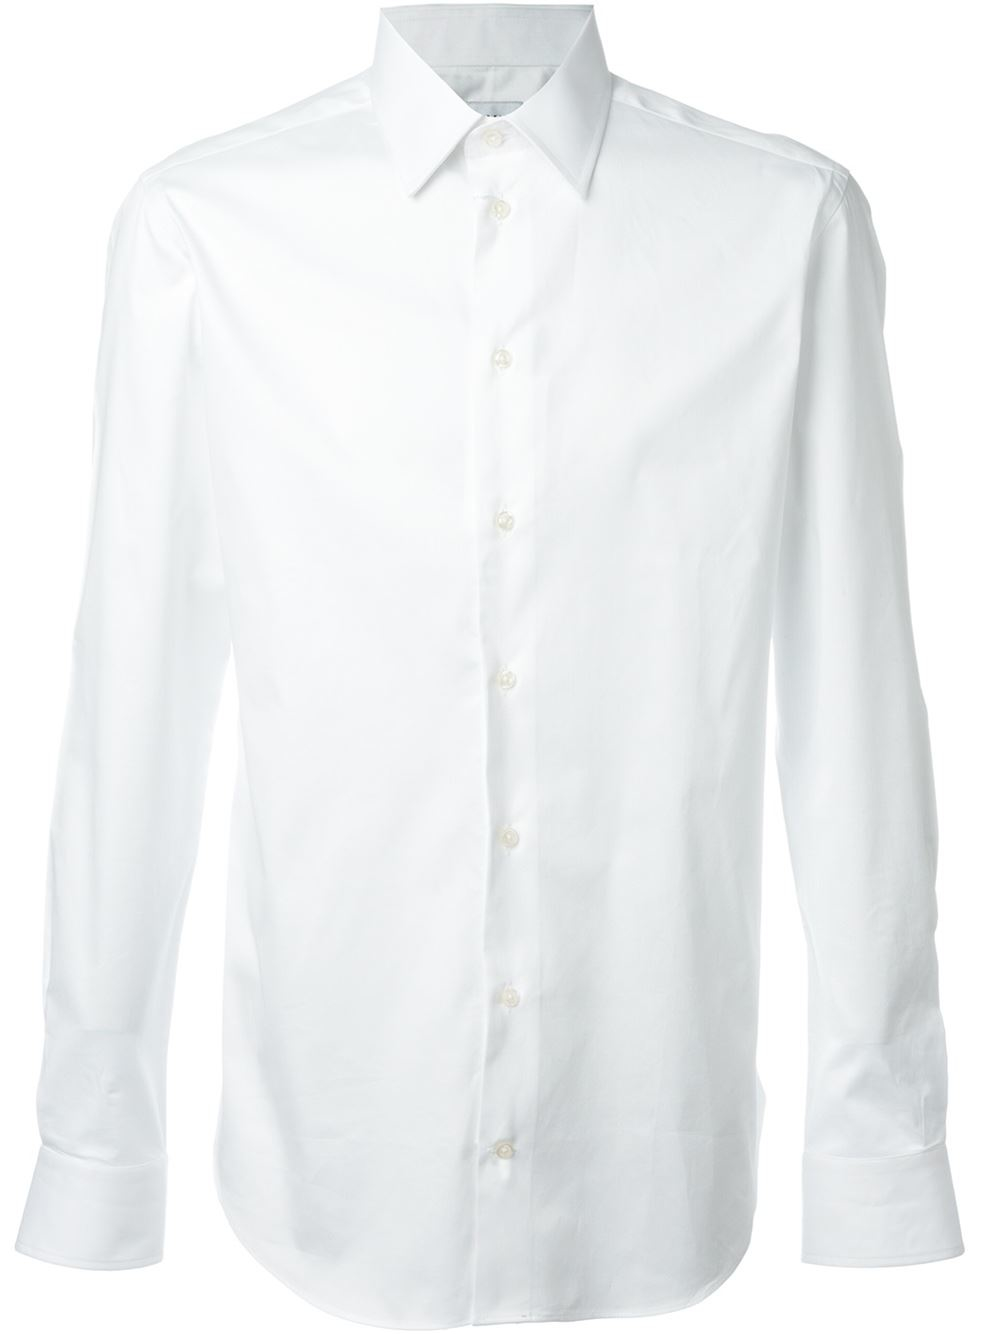 Armani Cotton Italian Collar Shirt in Black for Men - Lyst